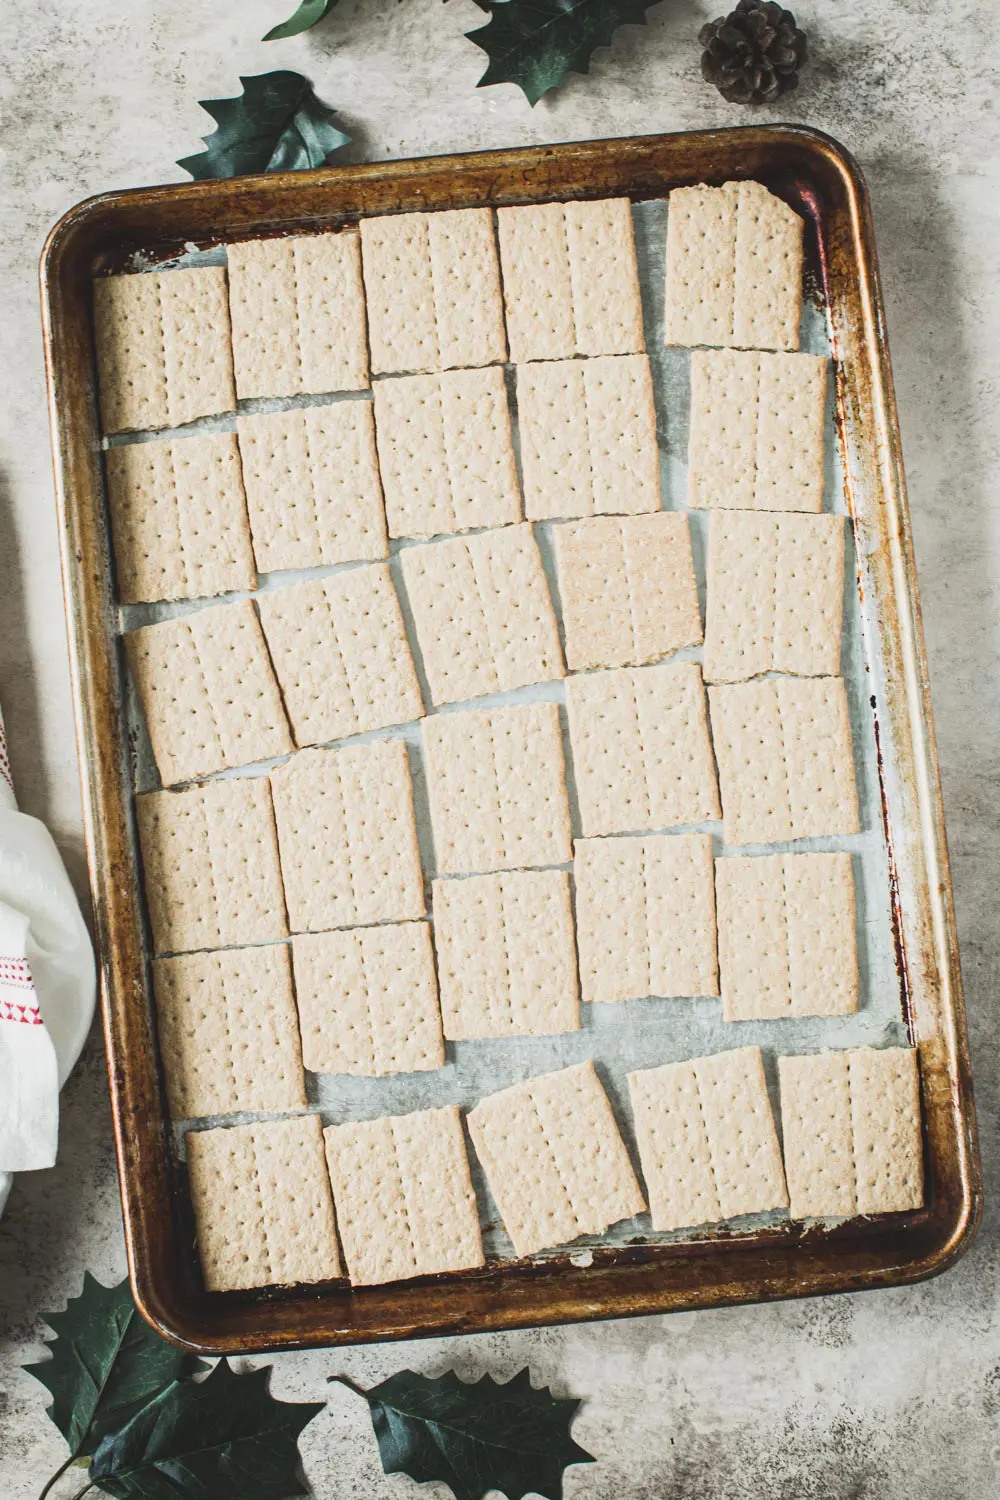 Graham crackers on a rimmed baking sheet.